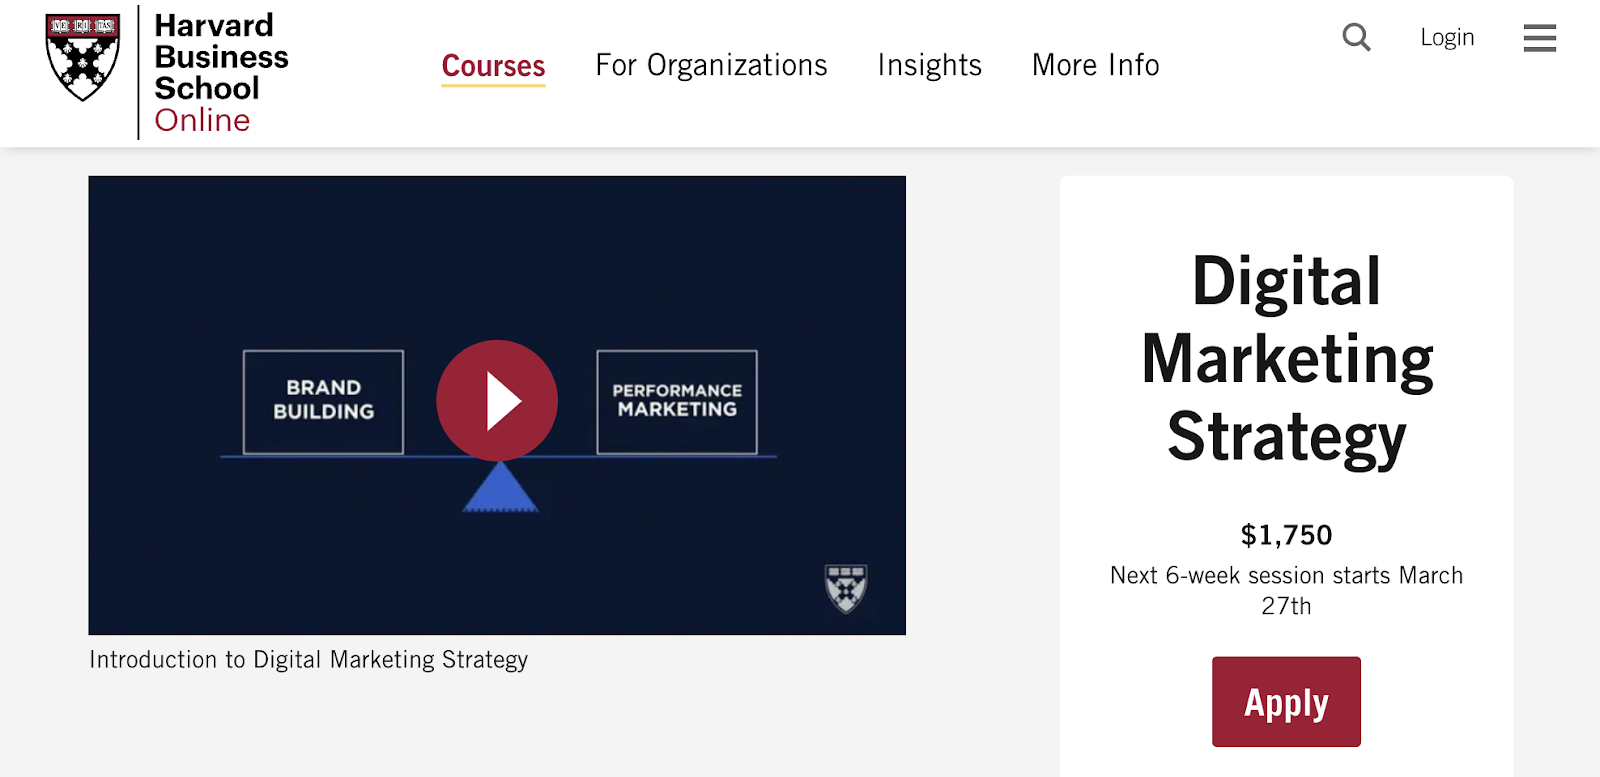 Digital Marketing Strategy course